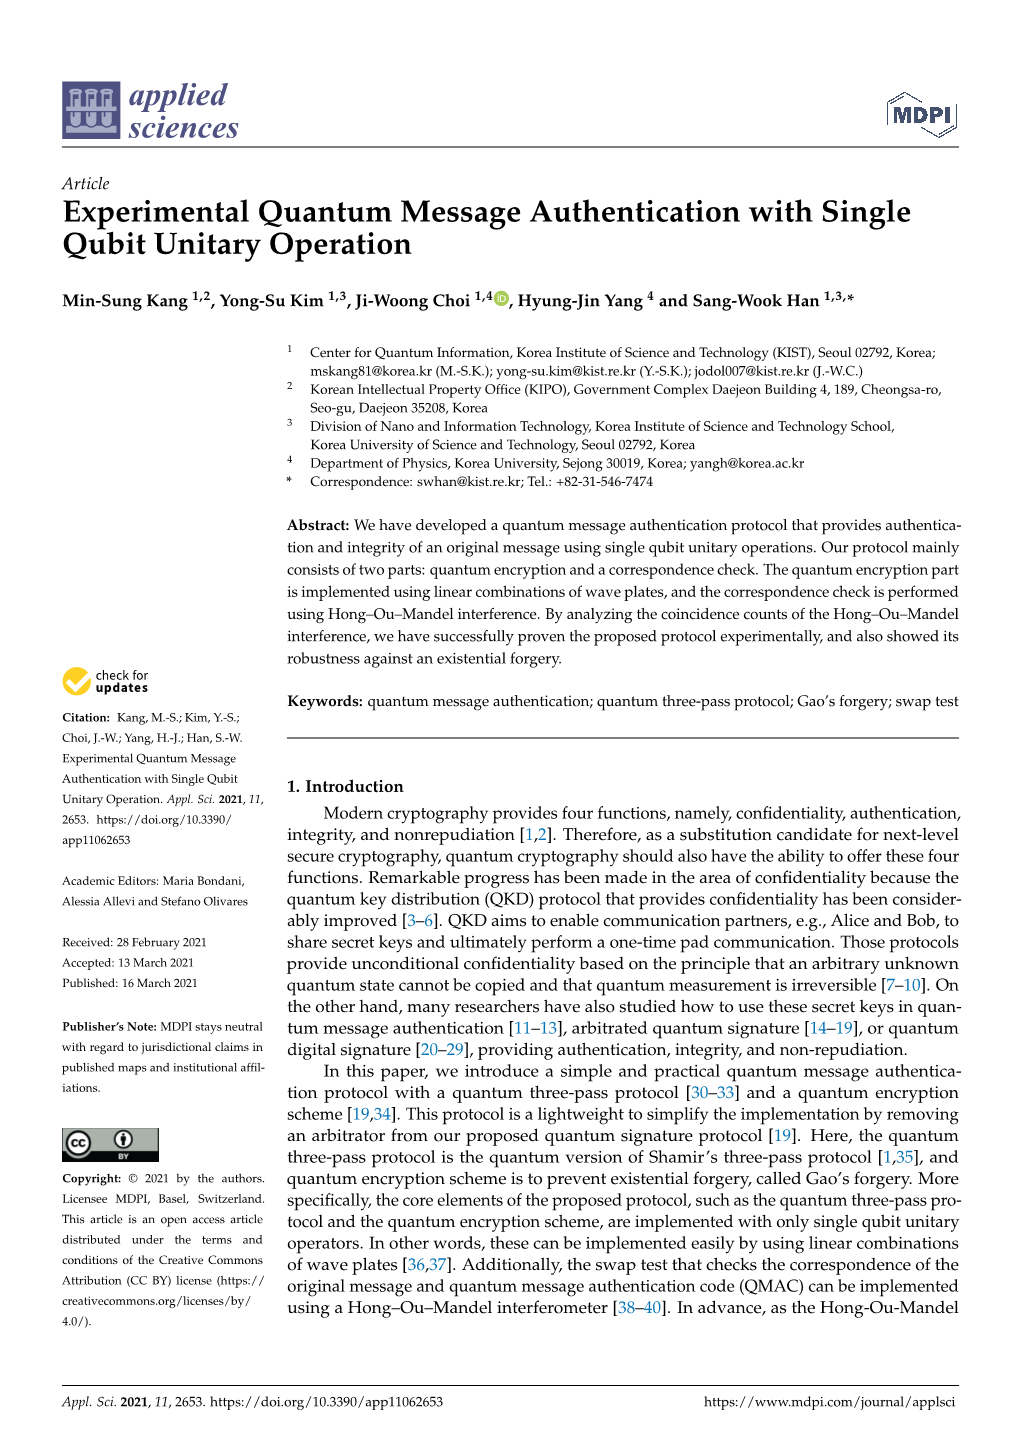 Experimental Quantum Message Authentication with Single Qubit Unitary Operation